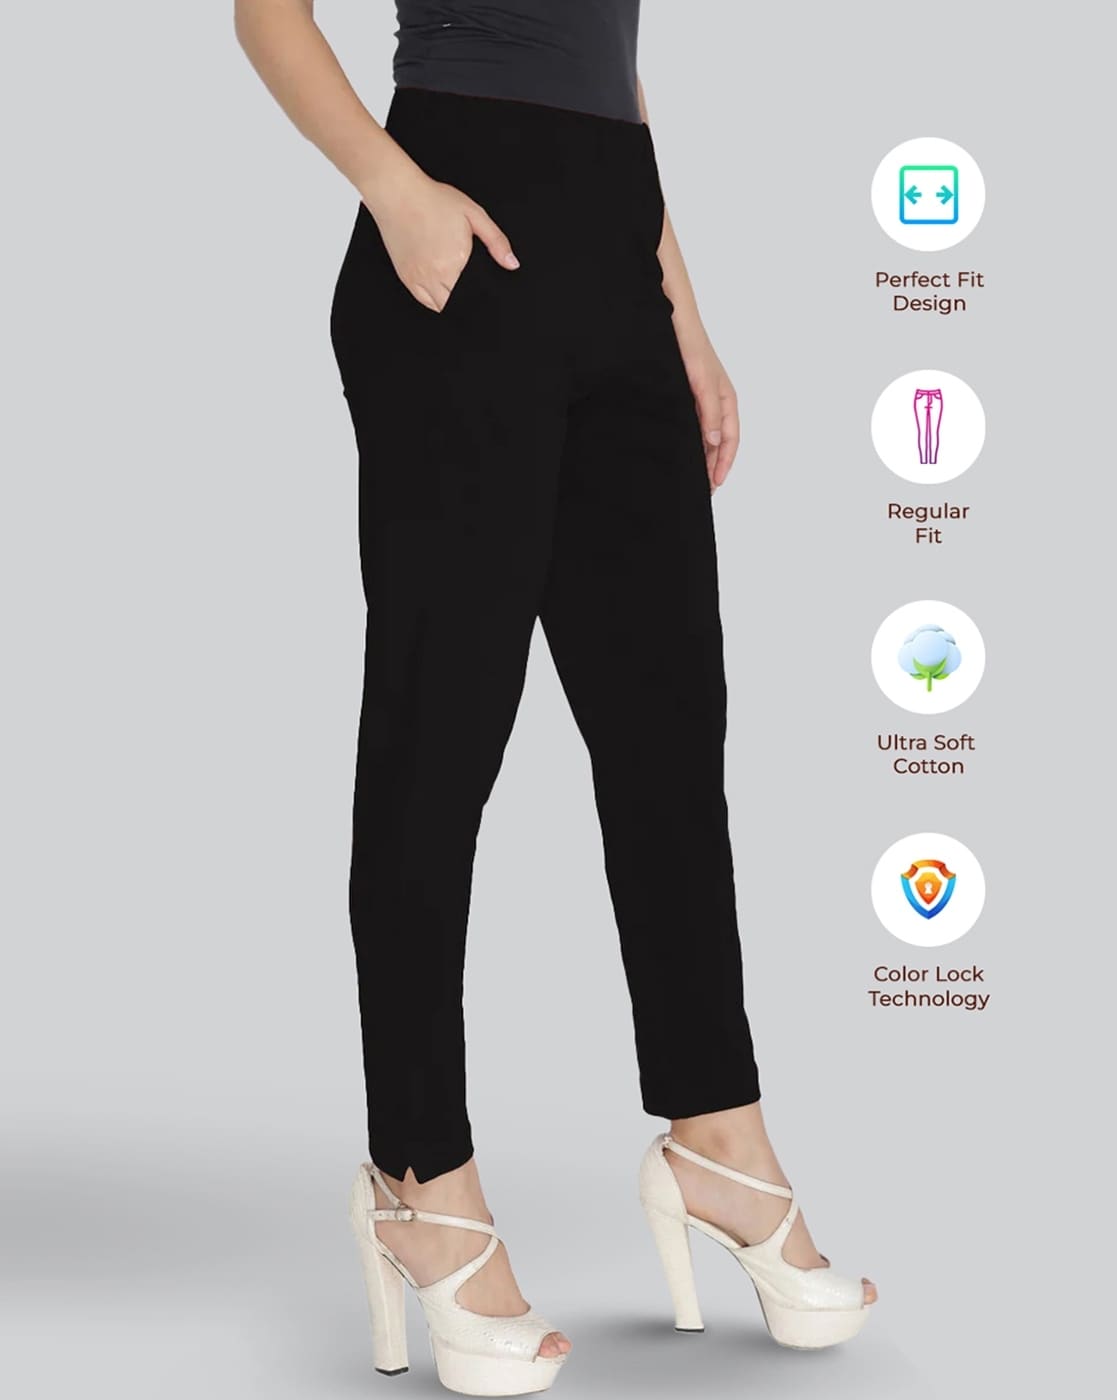 LYRA PANTS - BLACK  Evolve Shop Women's Clothing & Fashion Online